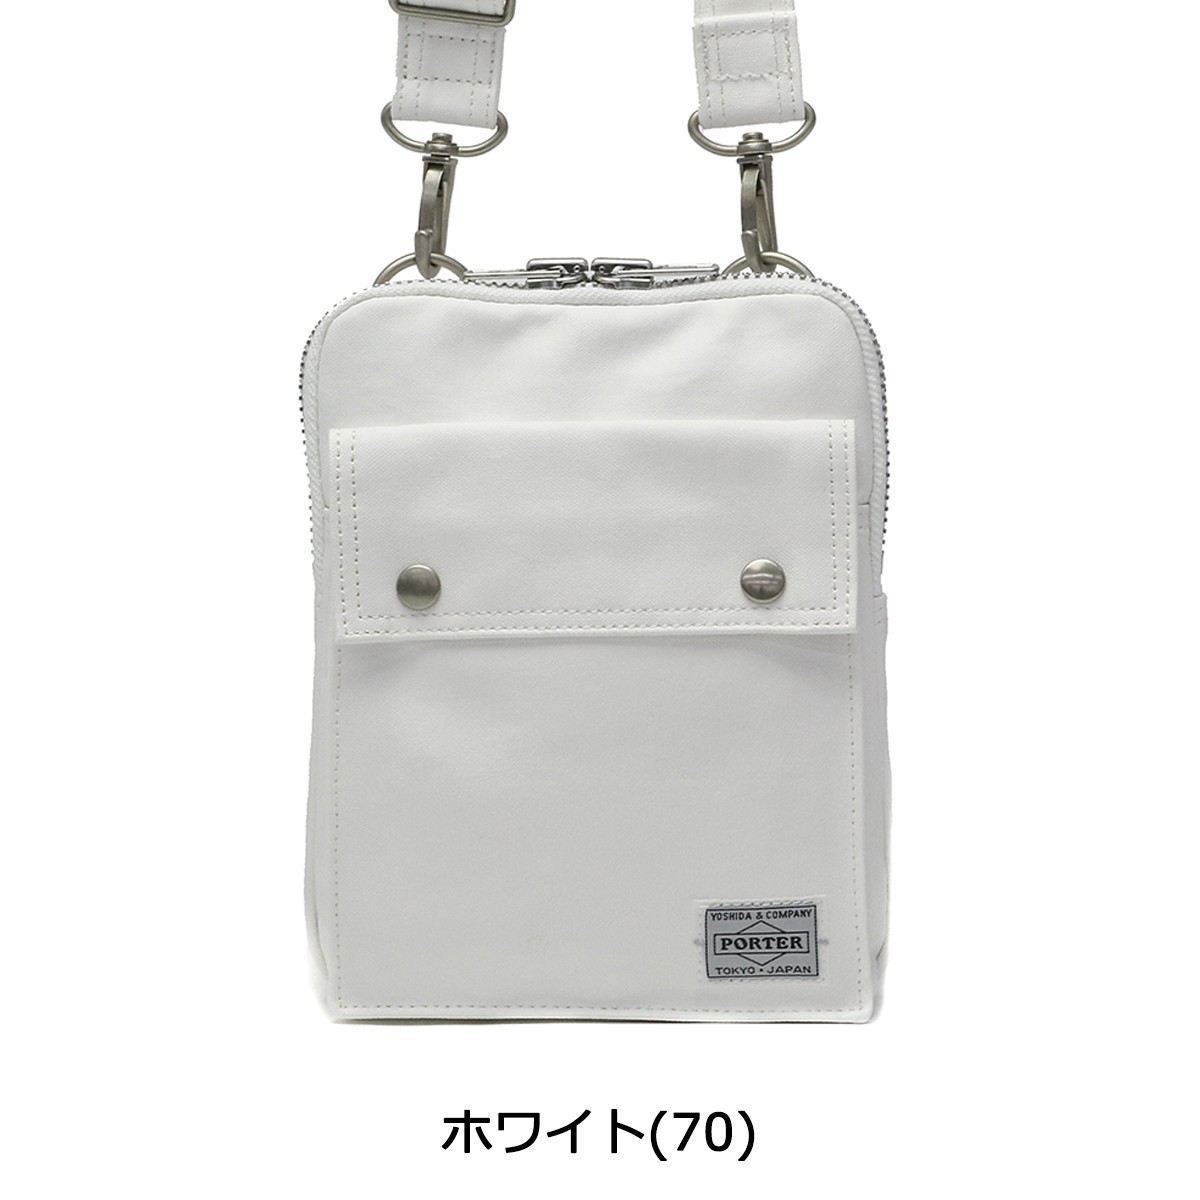  Porter Freestyle shoulder bag (S) 707-07146 Yoshida bag PORTER FREE STYLE men's lady's light small brand diagonal .. Mini shoulder 